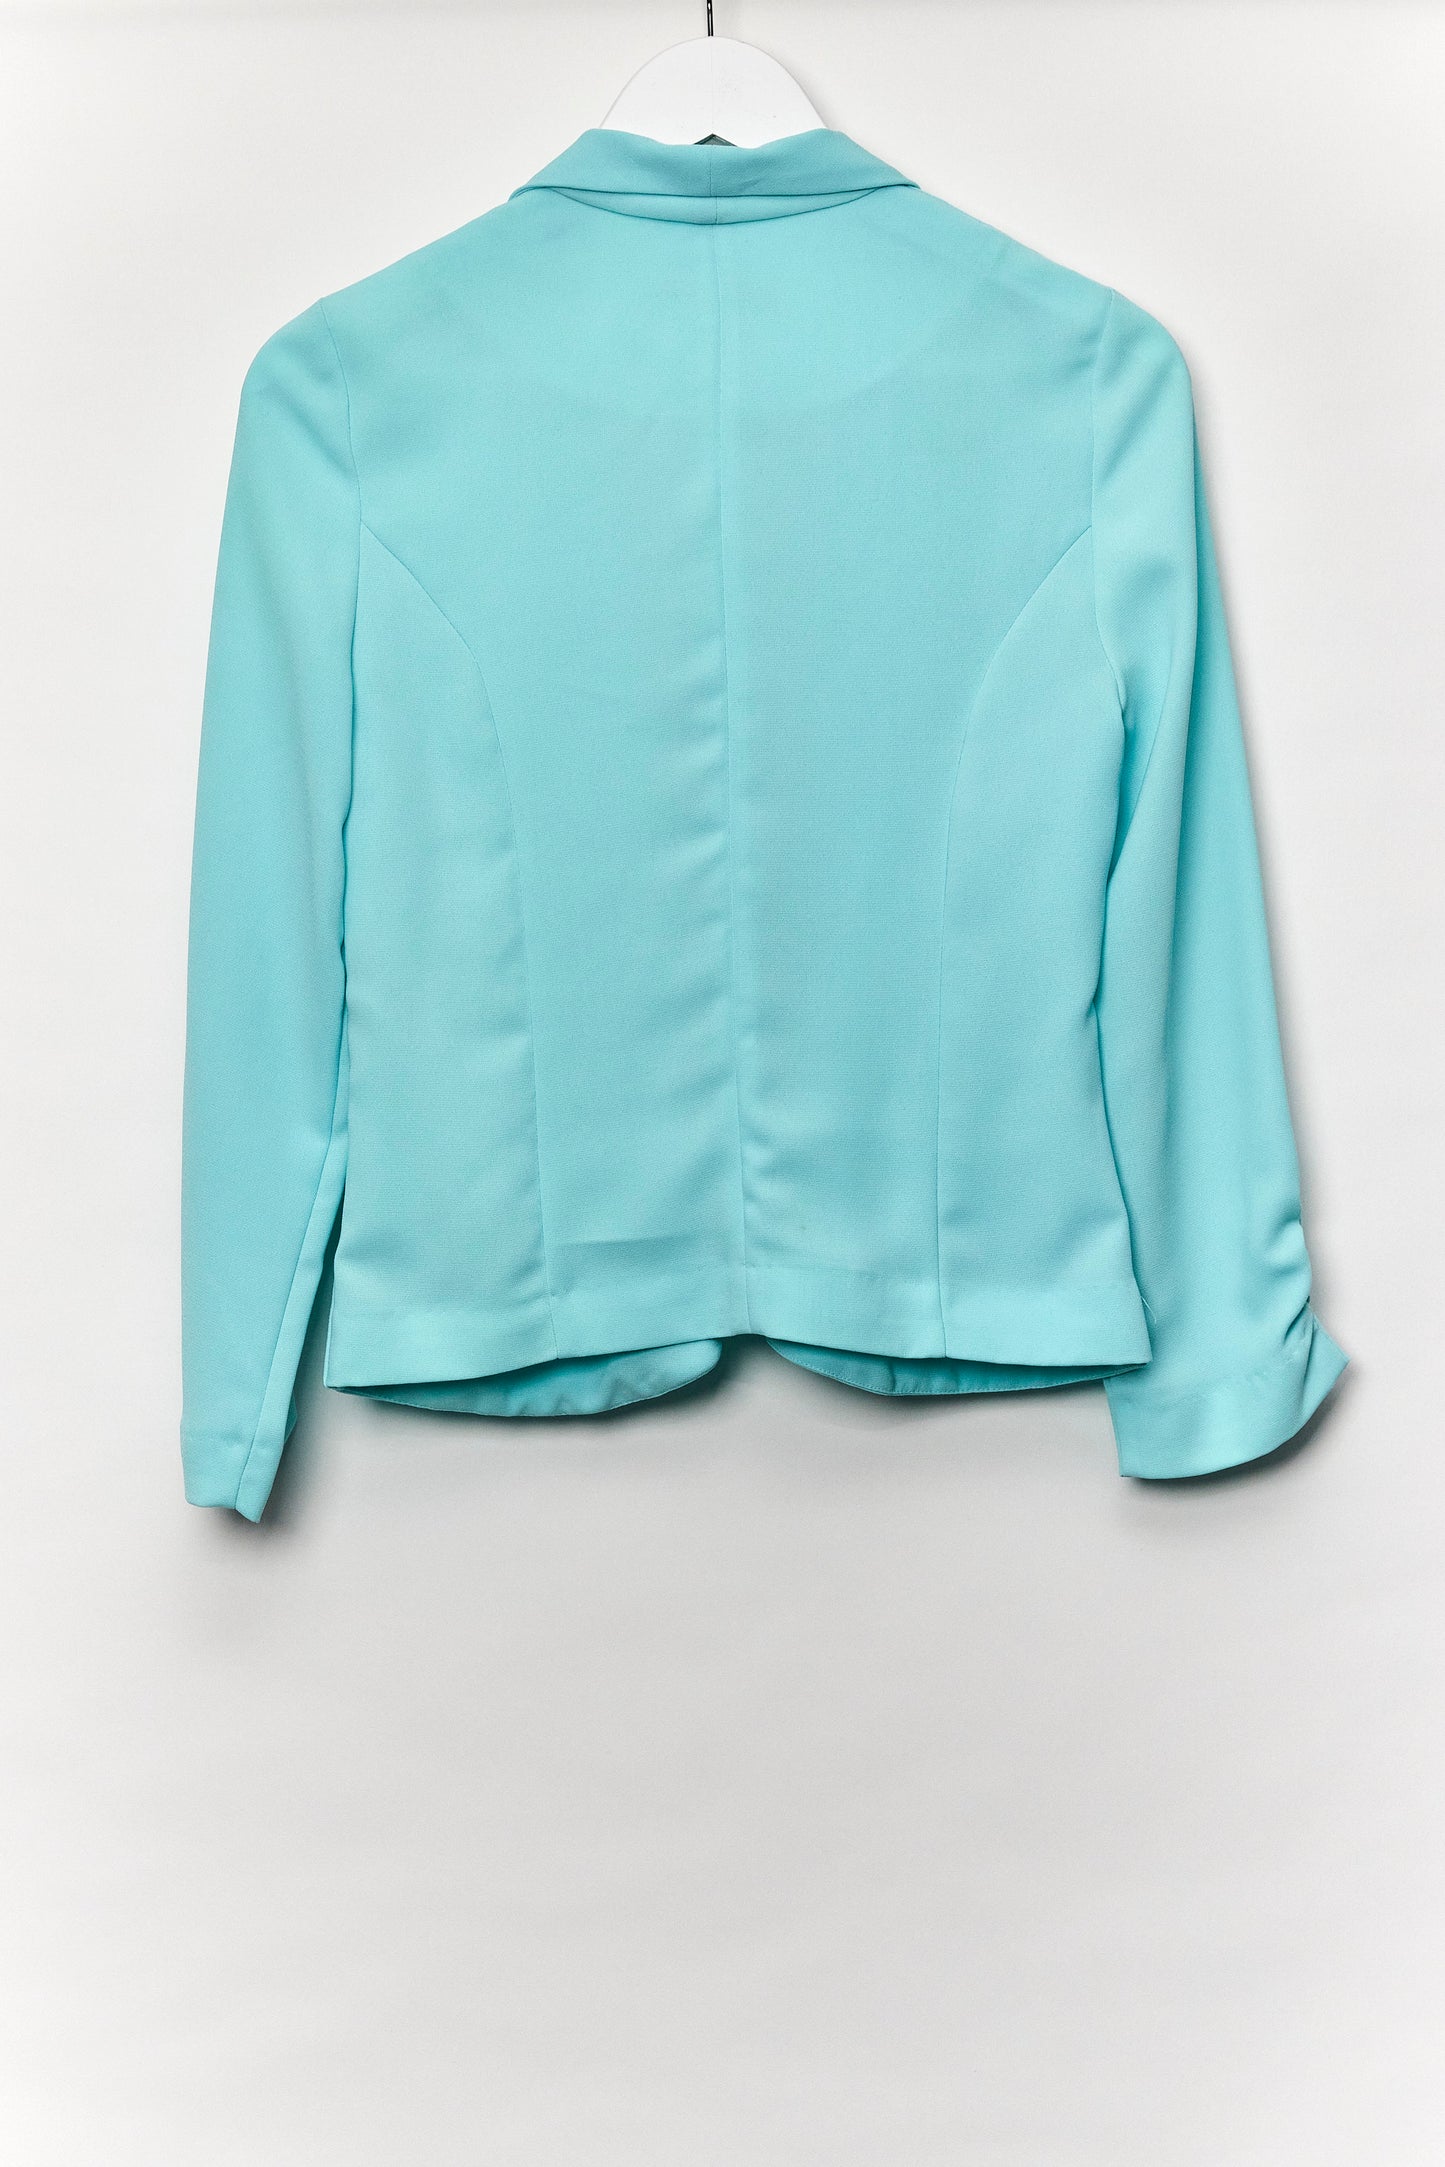 Womens Atmosphere turquoise blazer size 10